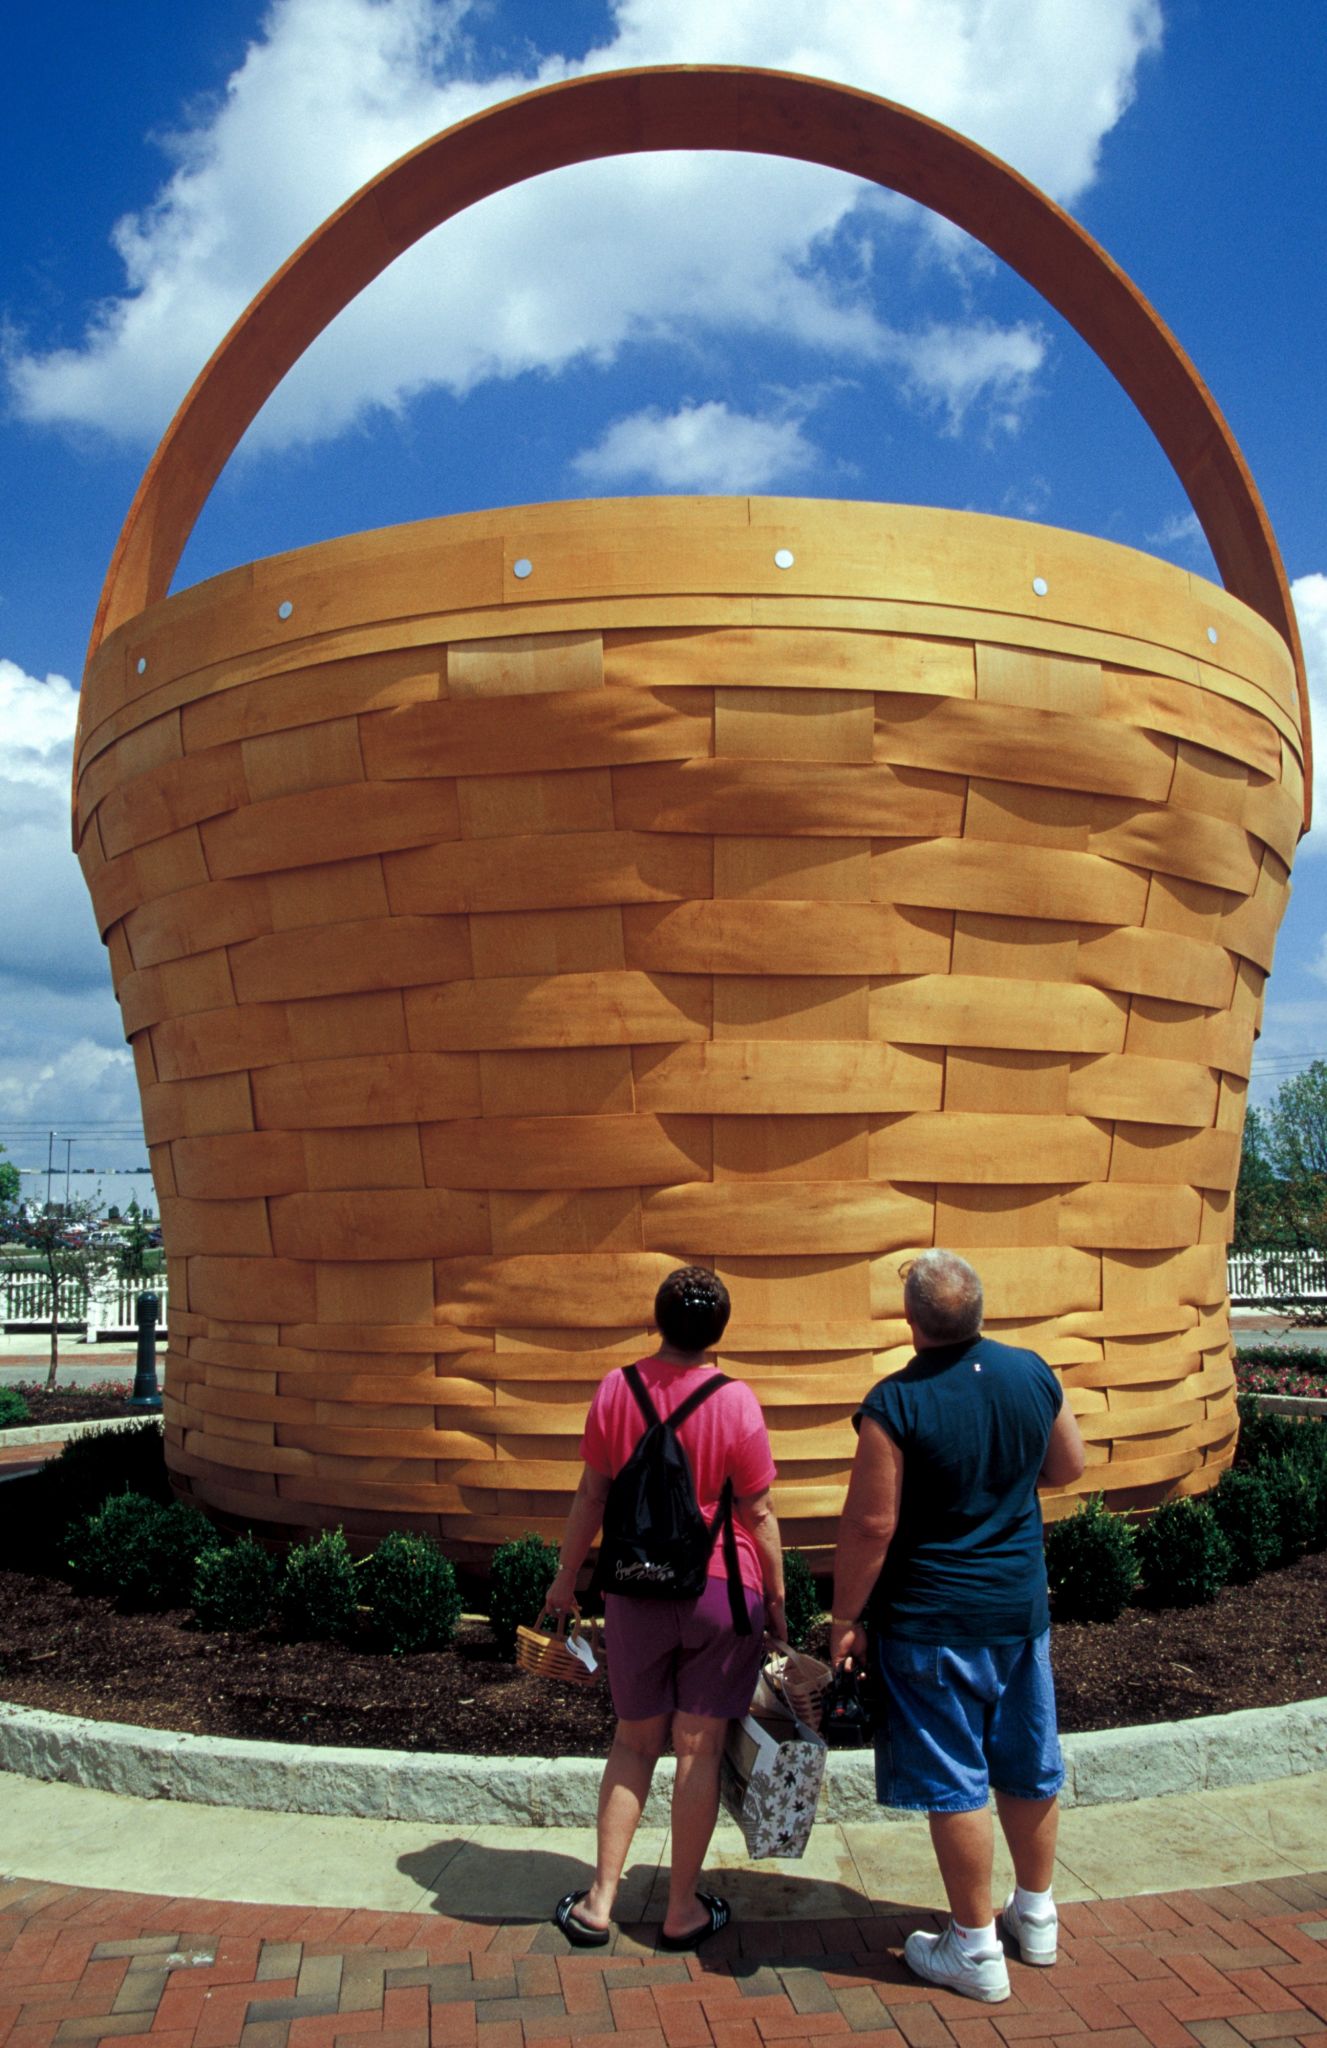 The Strange Second Life of Ohio's 'Big Basket' Building - Atlas